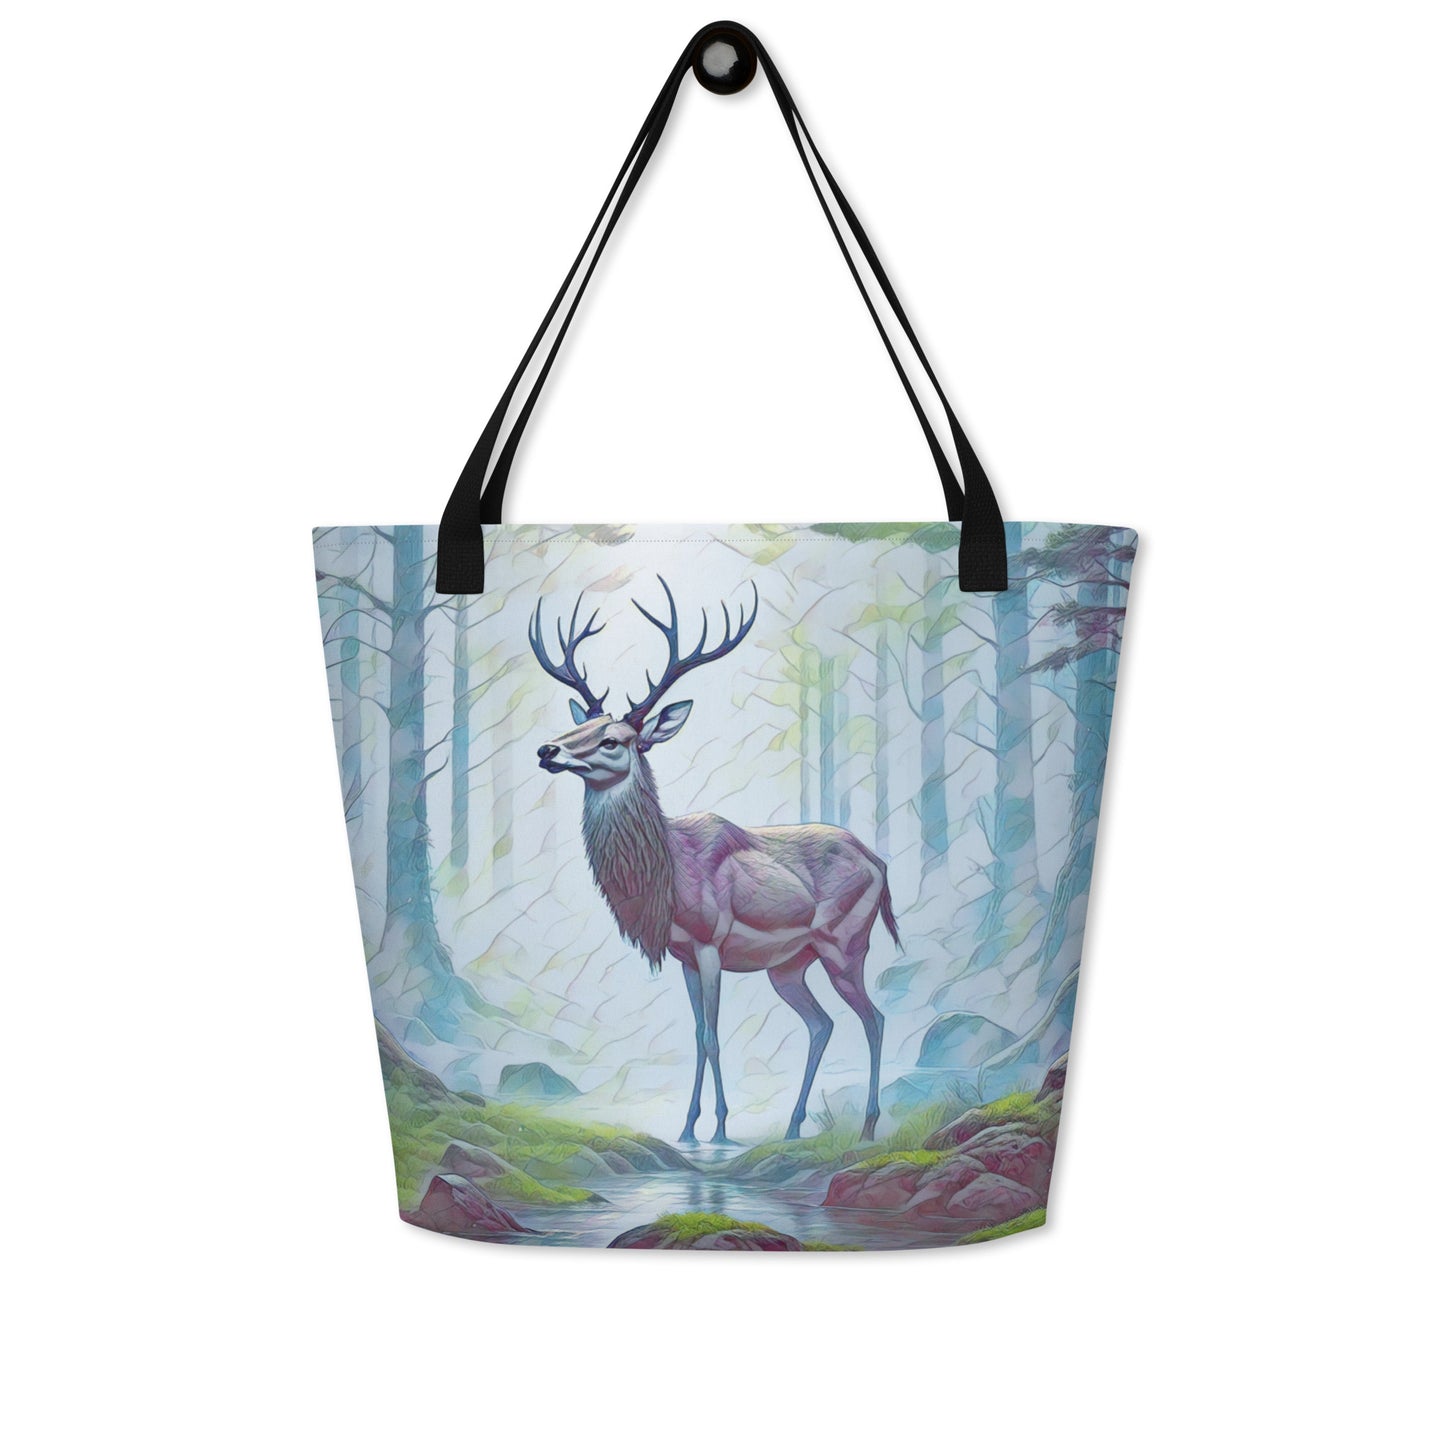 Oregon Deer in the Woods - Digital Art - Large 16x20 Tote Bag W/Pocket $34.95